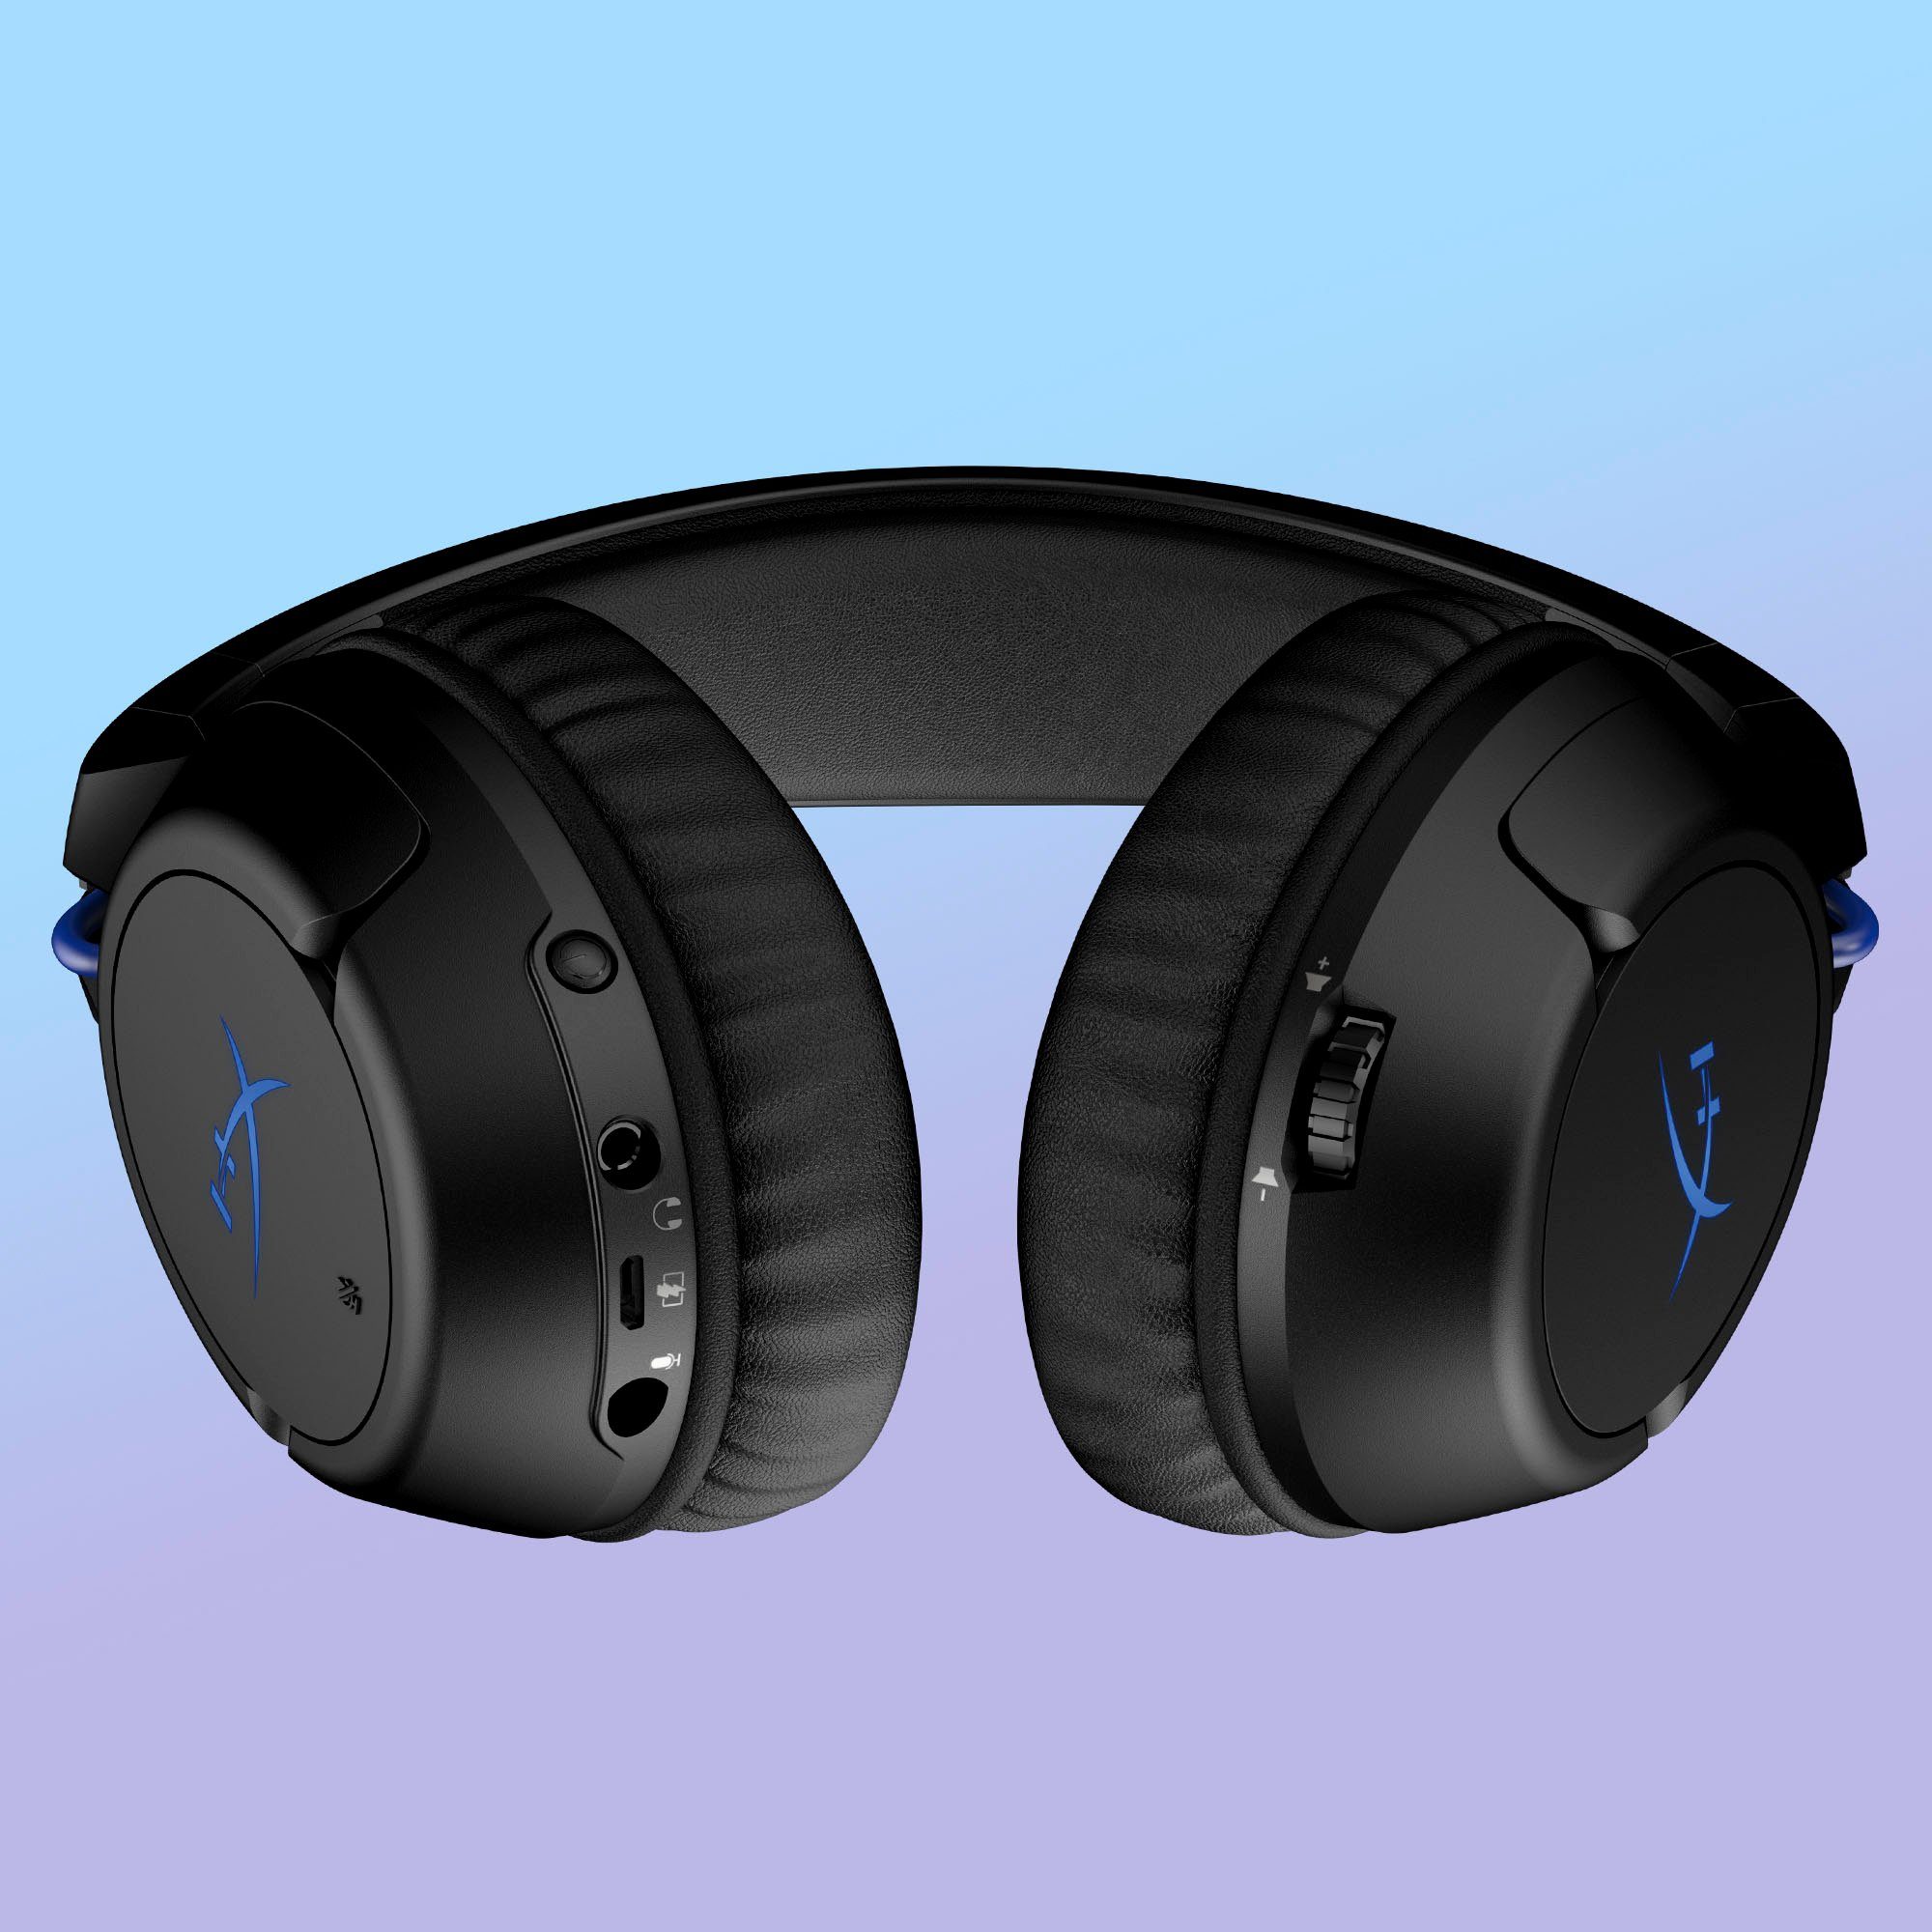 für Wireless abnehmbar, (Mikrofon Flight Rauschunterdrückung, HyperX PlayStation Wireless) Cloud Black/Blue Gaming-Headset